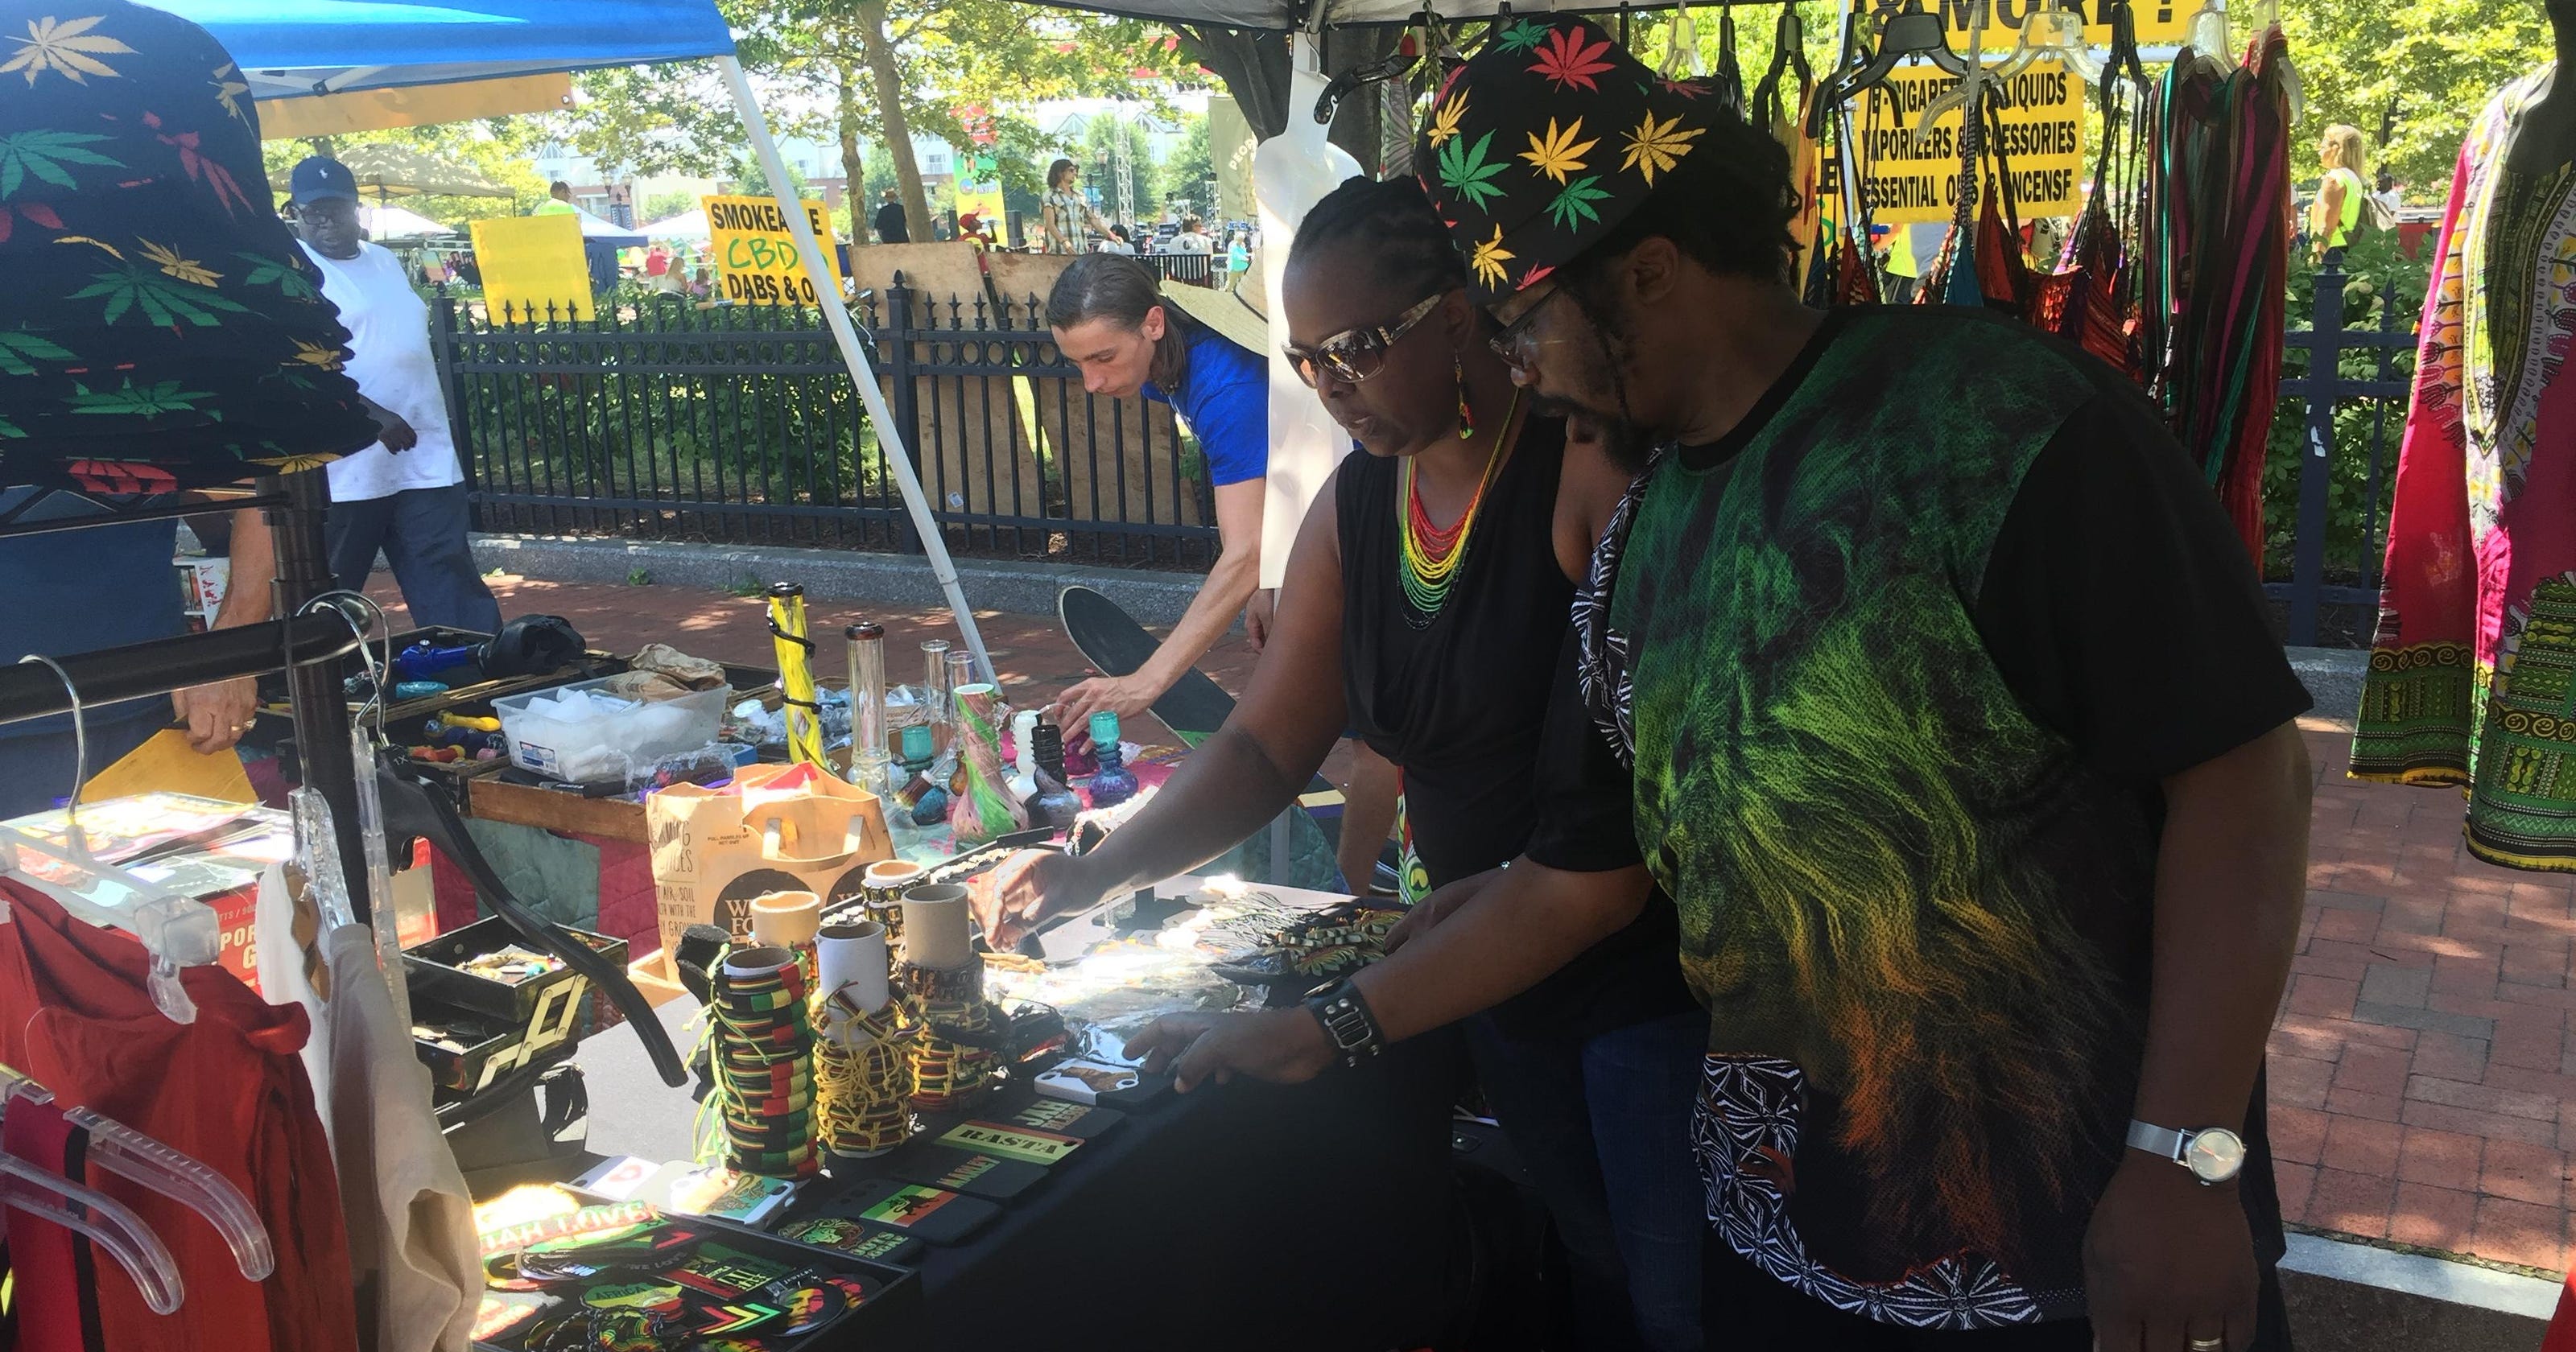 Delaware hosts Bob Marley reggae fest